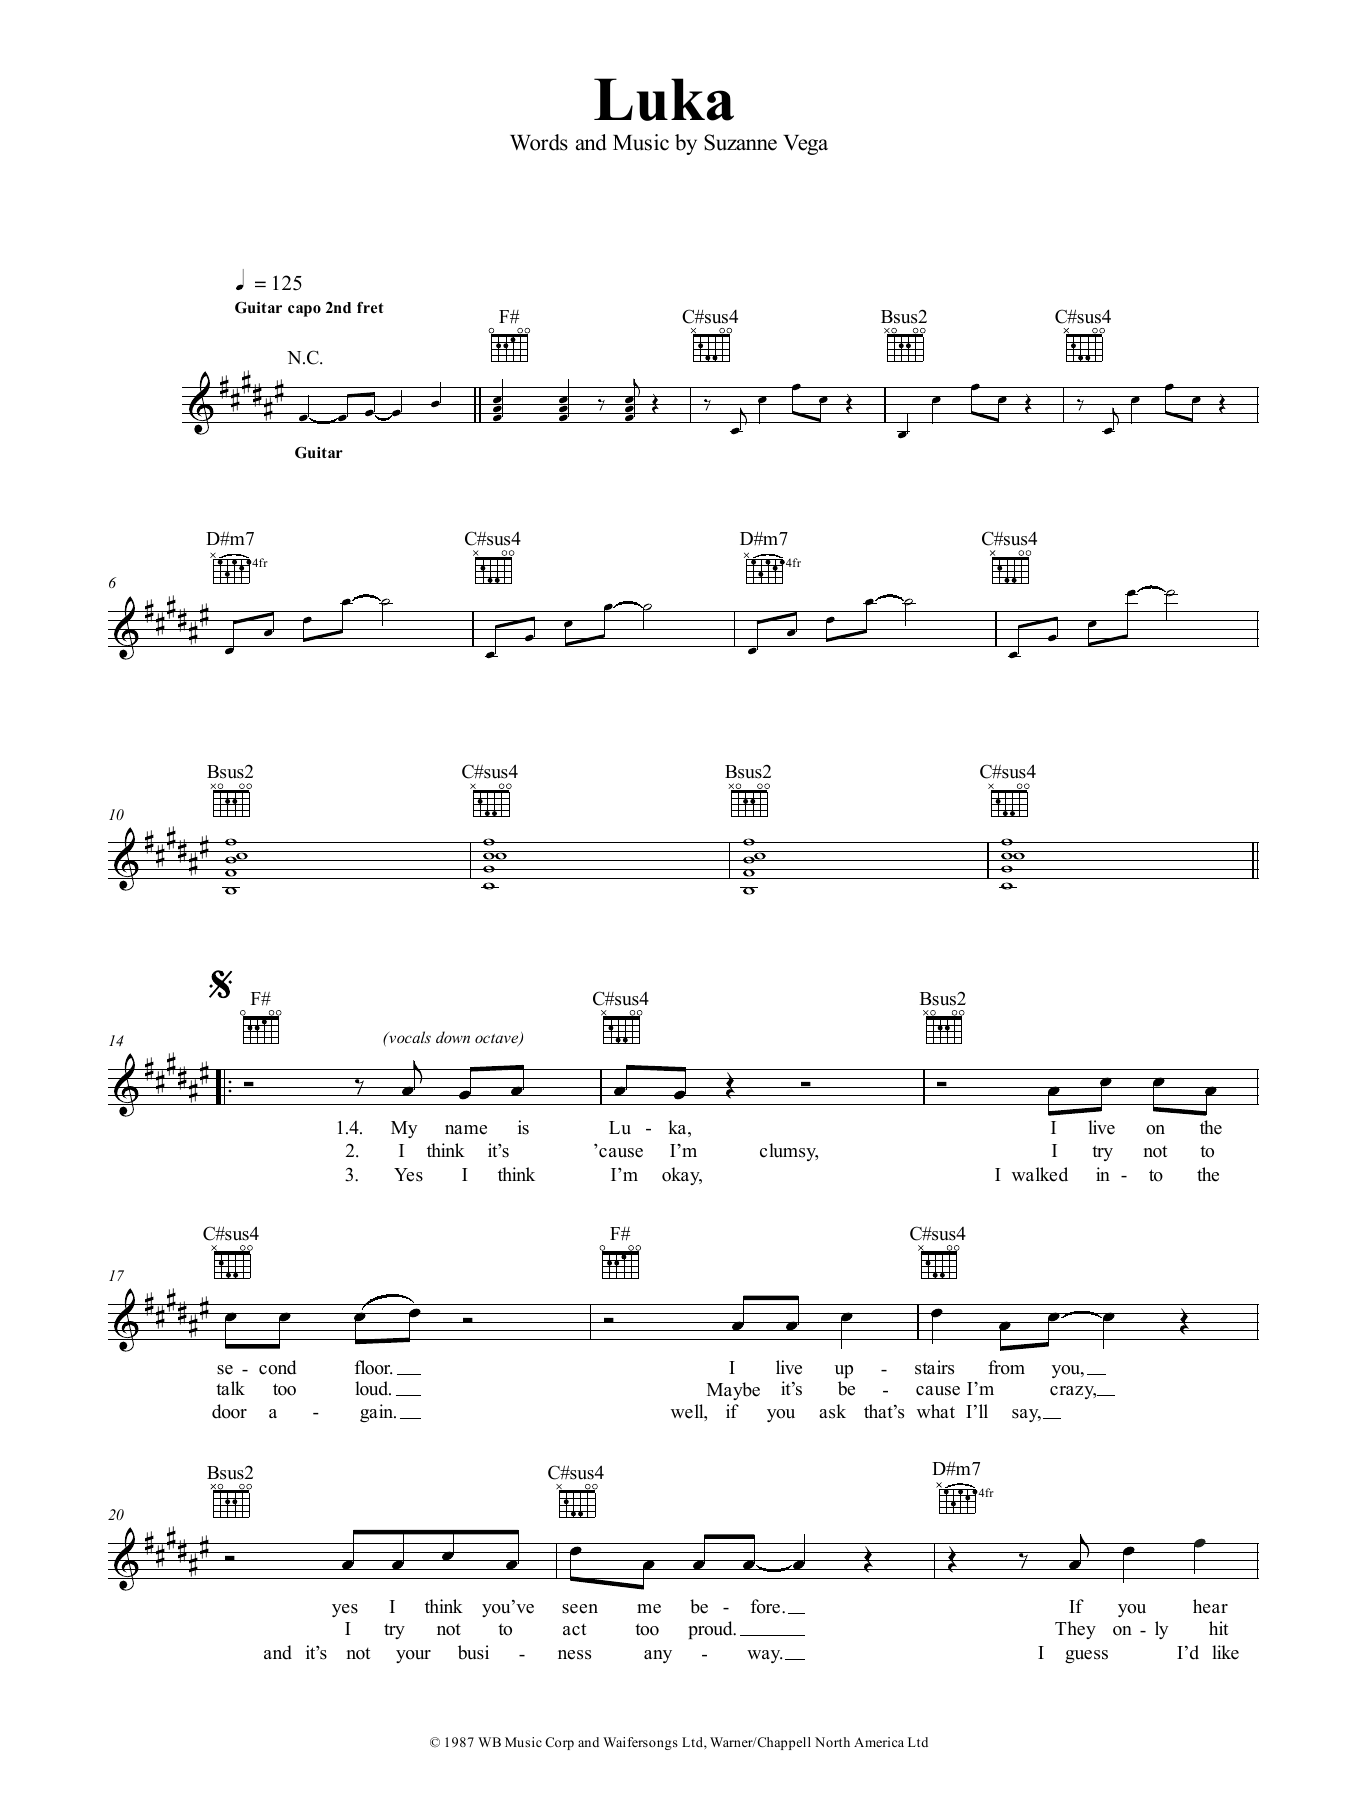 Suzanne Vega Luka Sheet Music Notes & Chords for Lead Sheet / Fake Book - Download or Print PDF